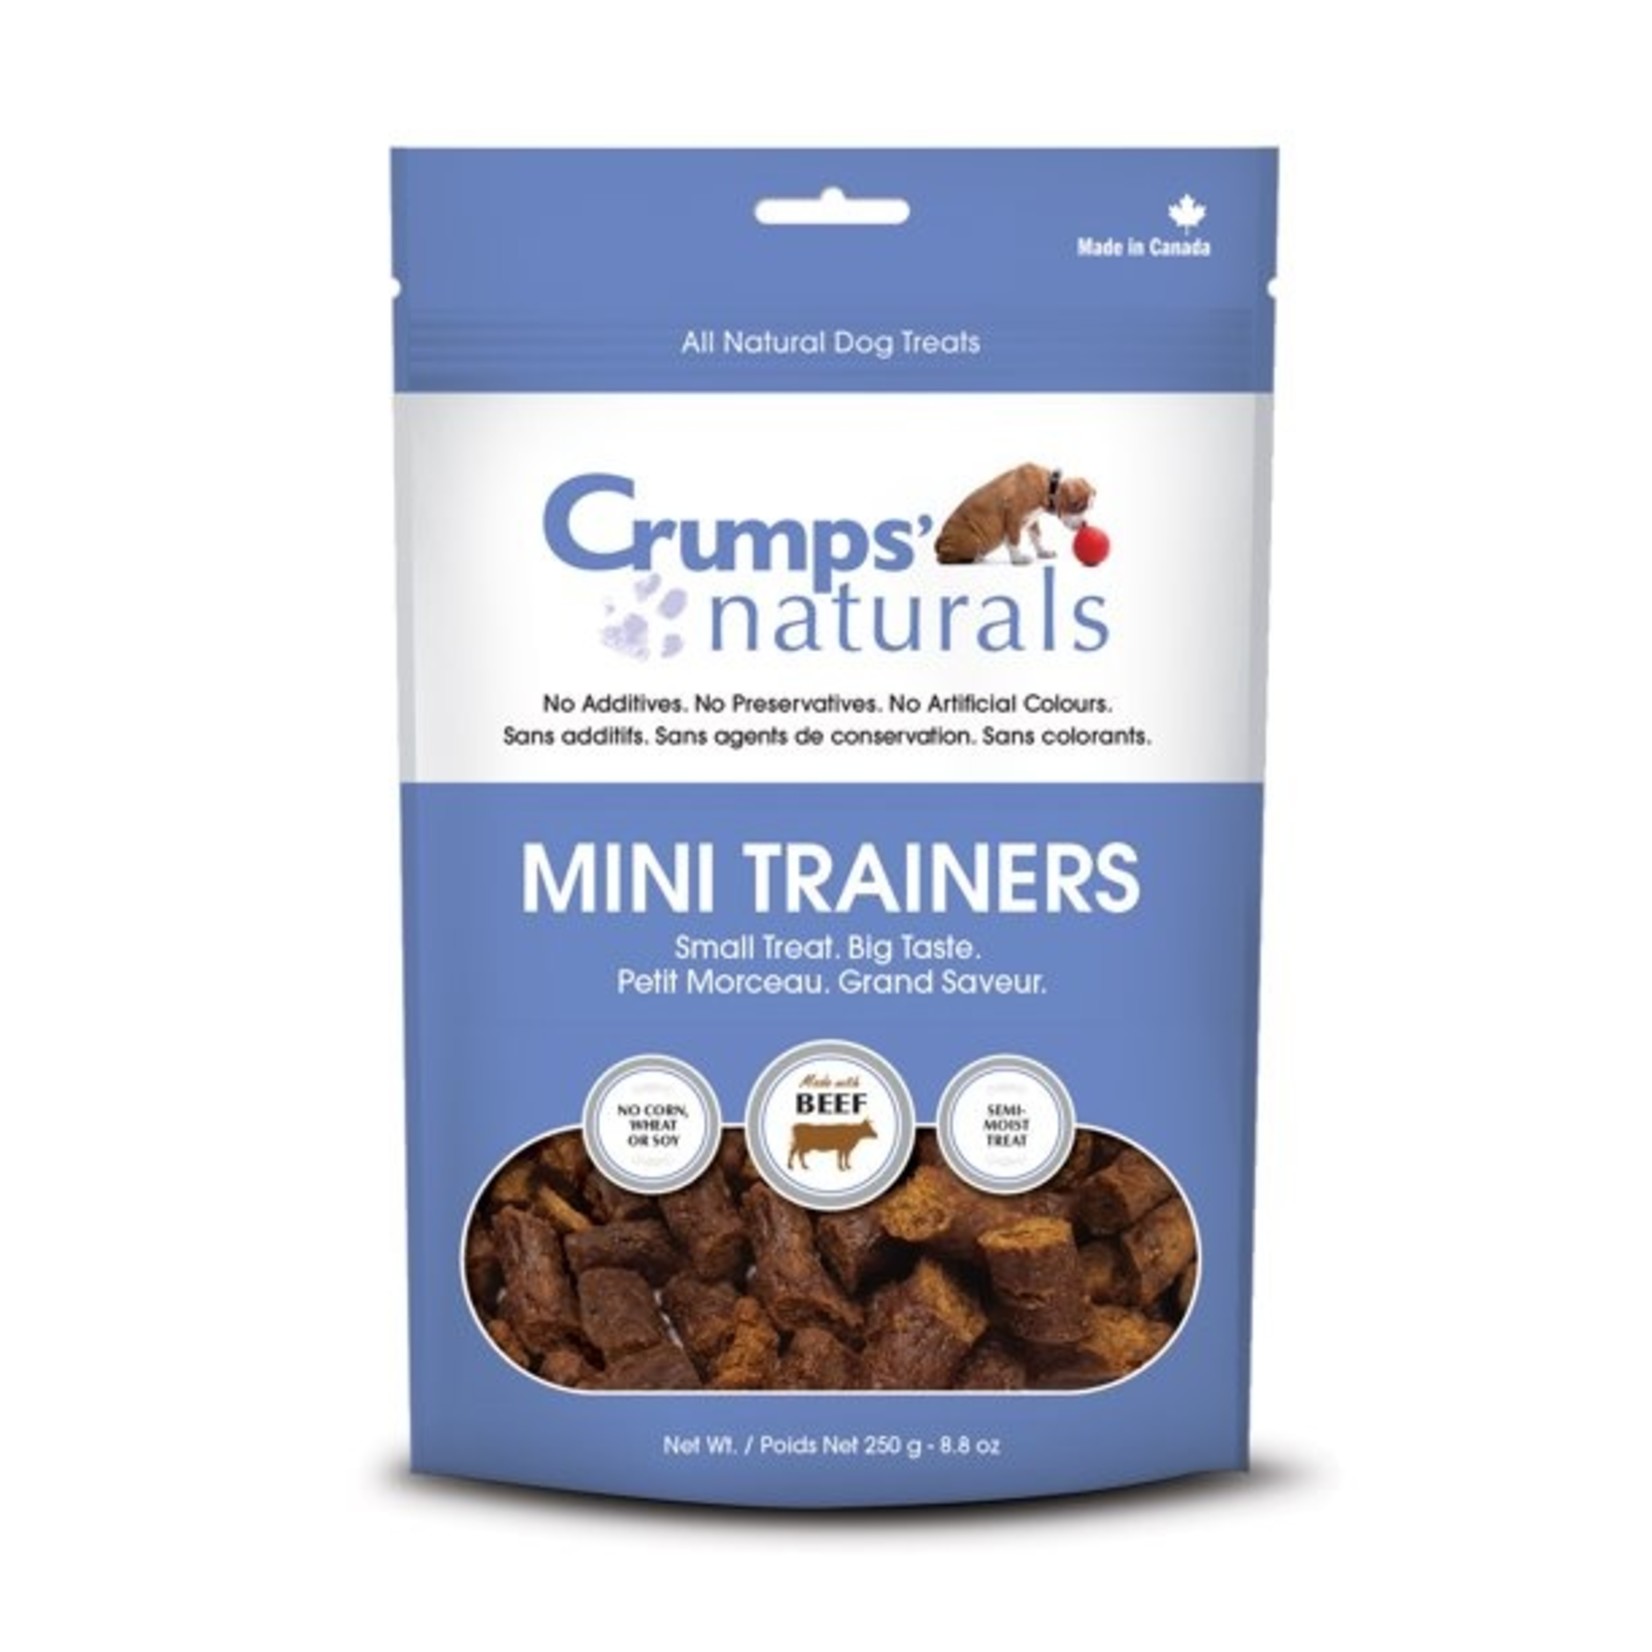 Crumps CRUMPS DOG TREATS MINI TRAINER BEEF SEMI MOIST 8.8 OZ